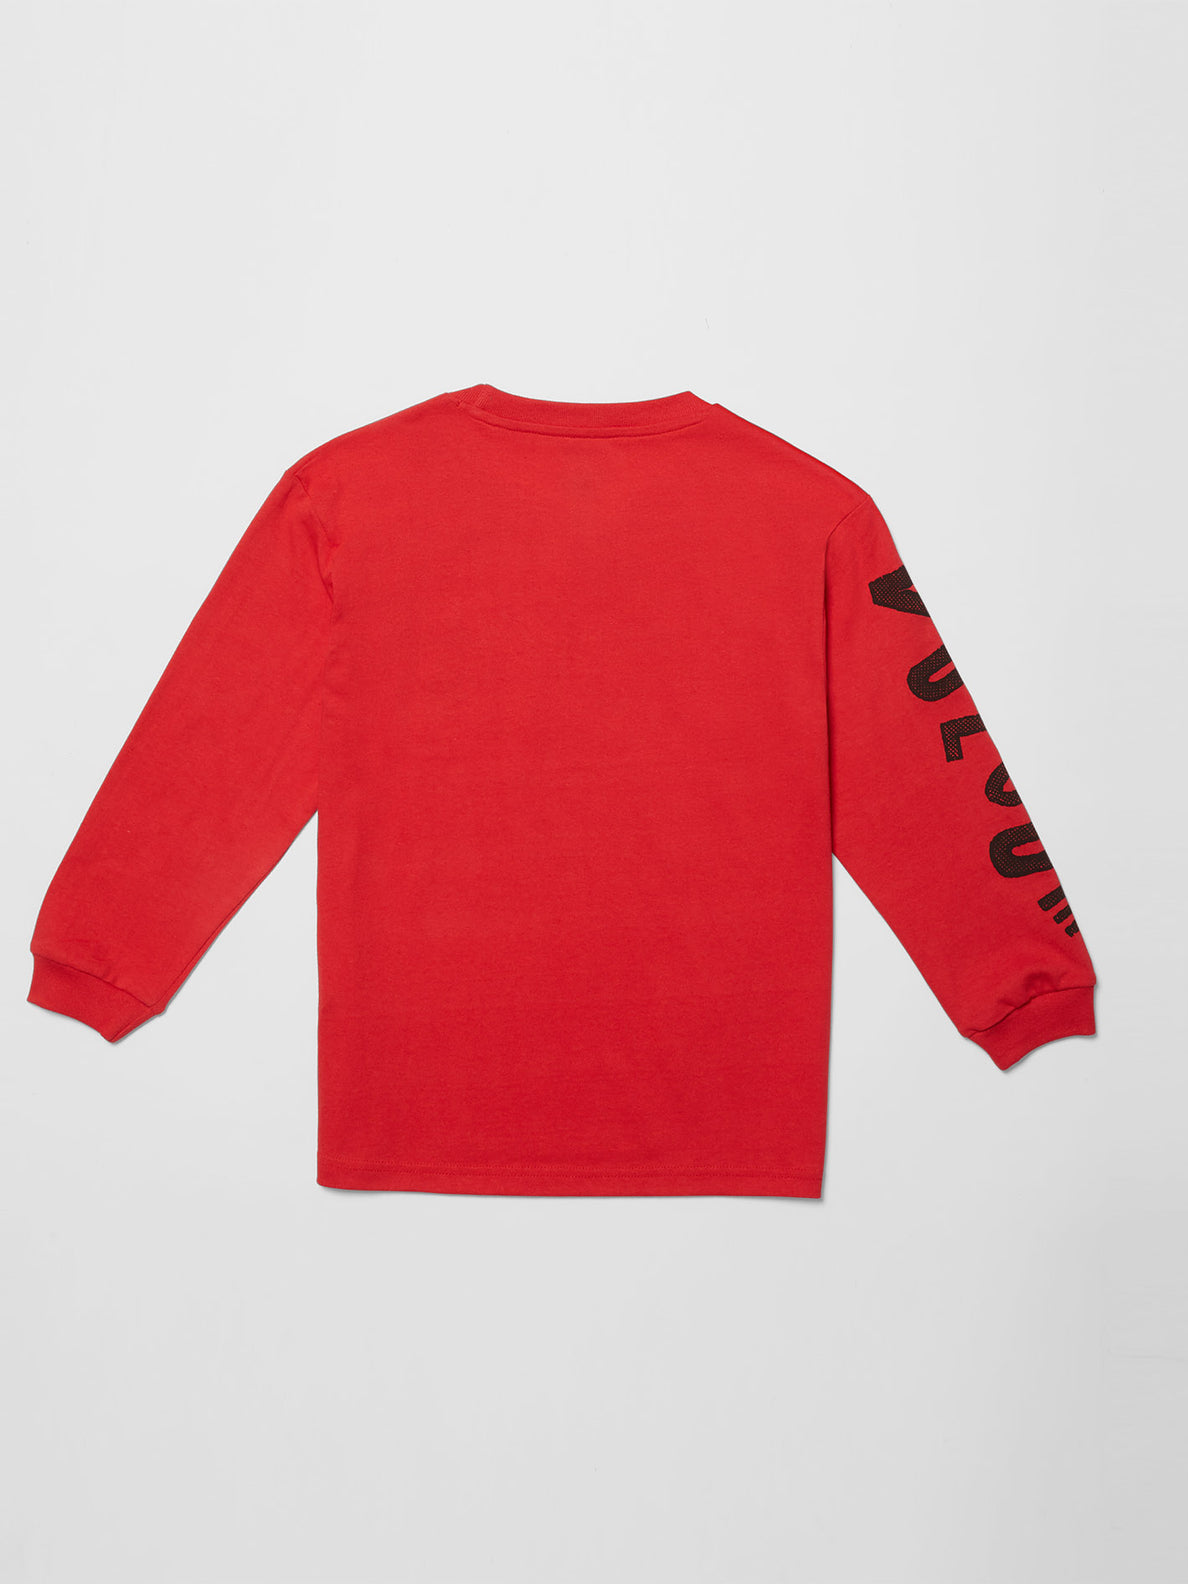 Sick 180 T-shirt - Carmine Red (C3612101_CMR) [B]